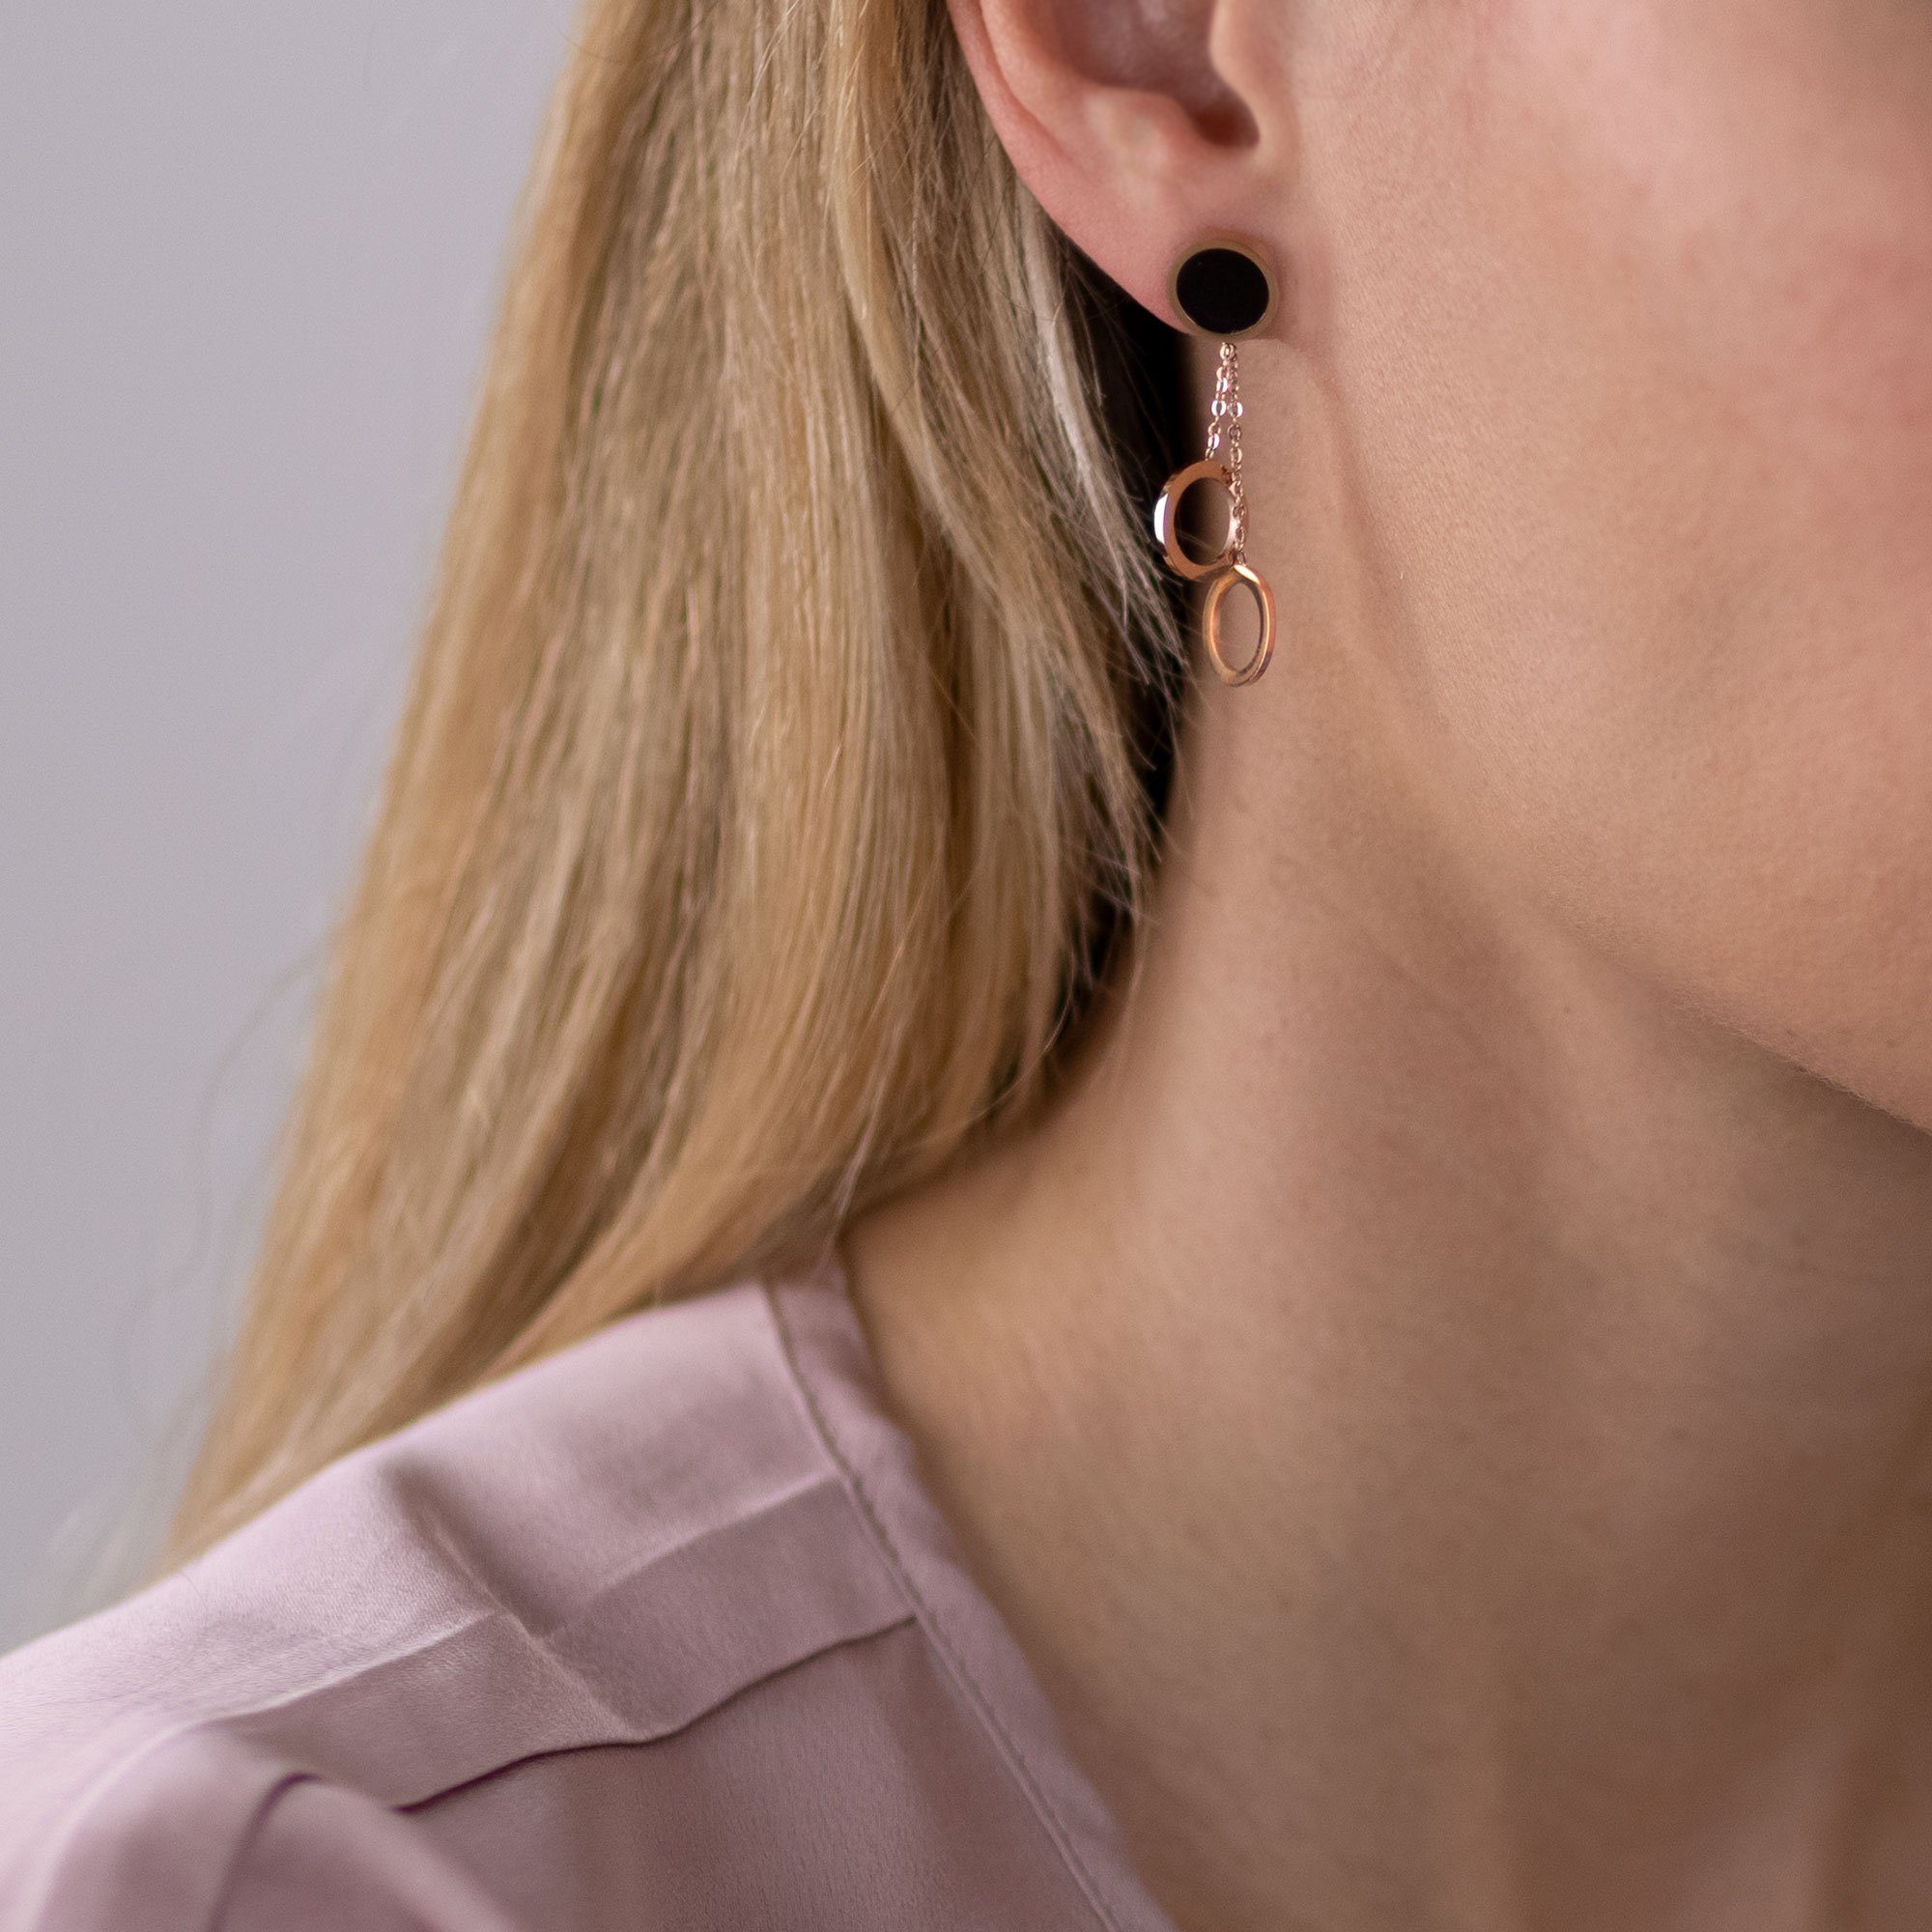 Paar Ohrringe Ohrhänger roségoldfarben aus ANNE glänzendem AILORIA Edelstahl ohrringe,